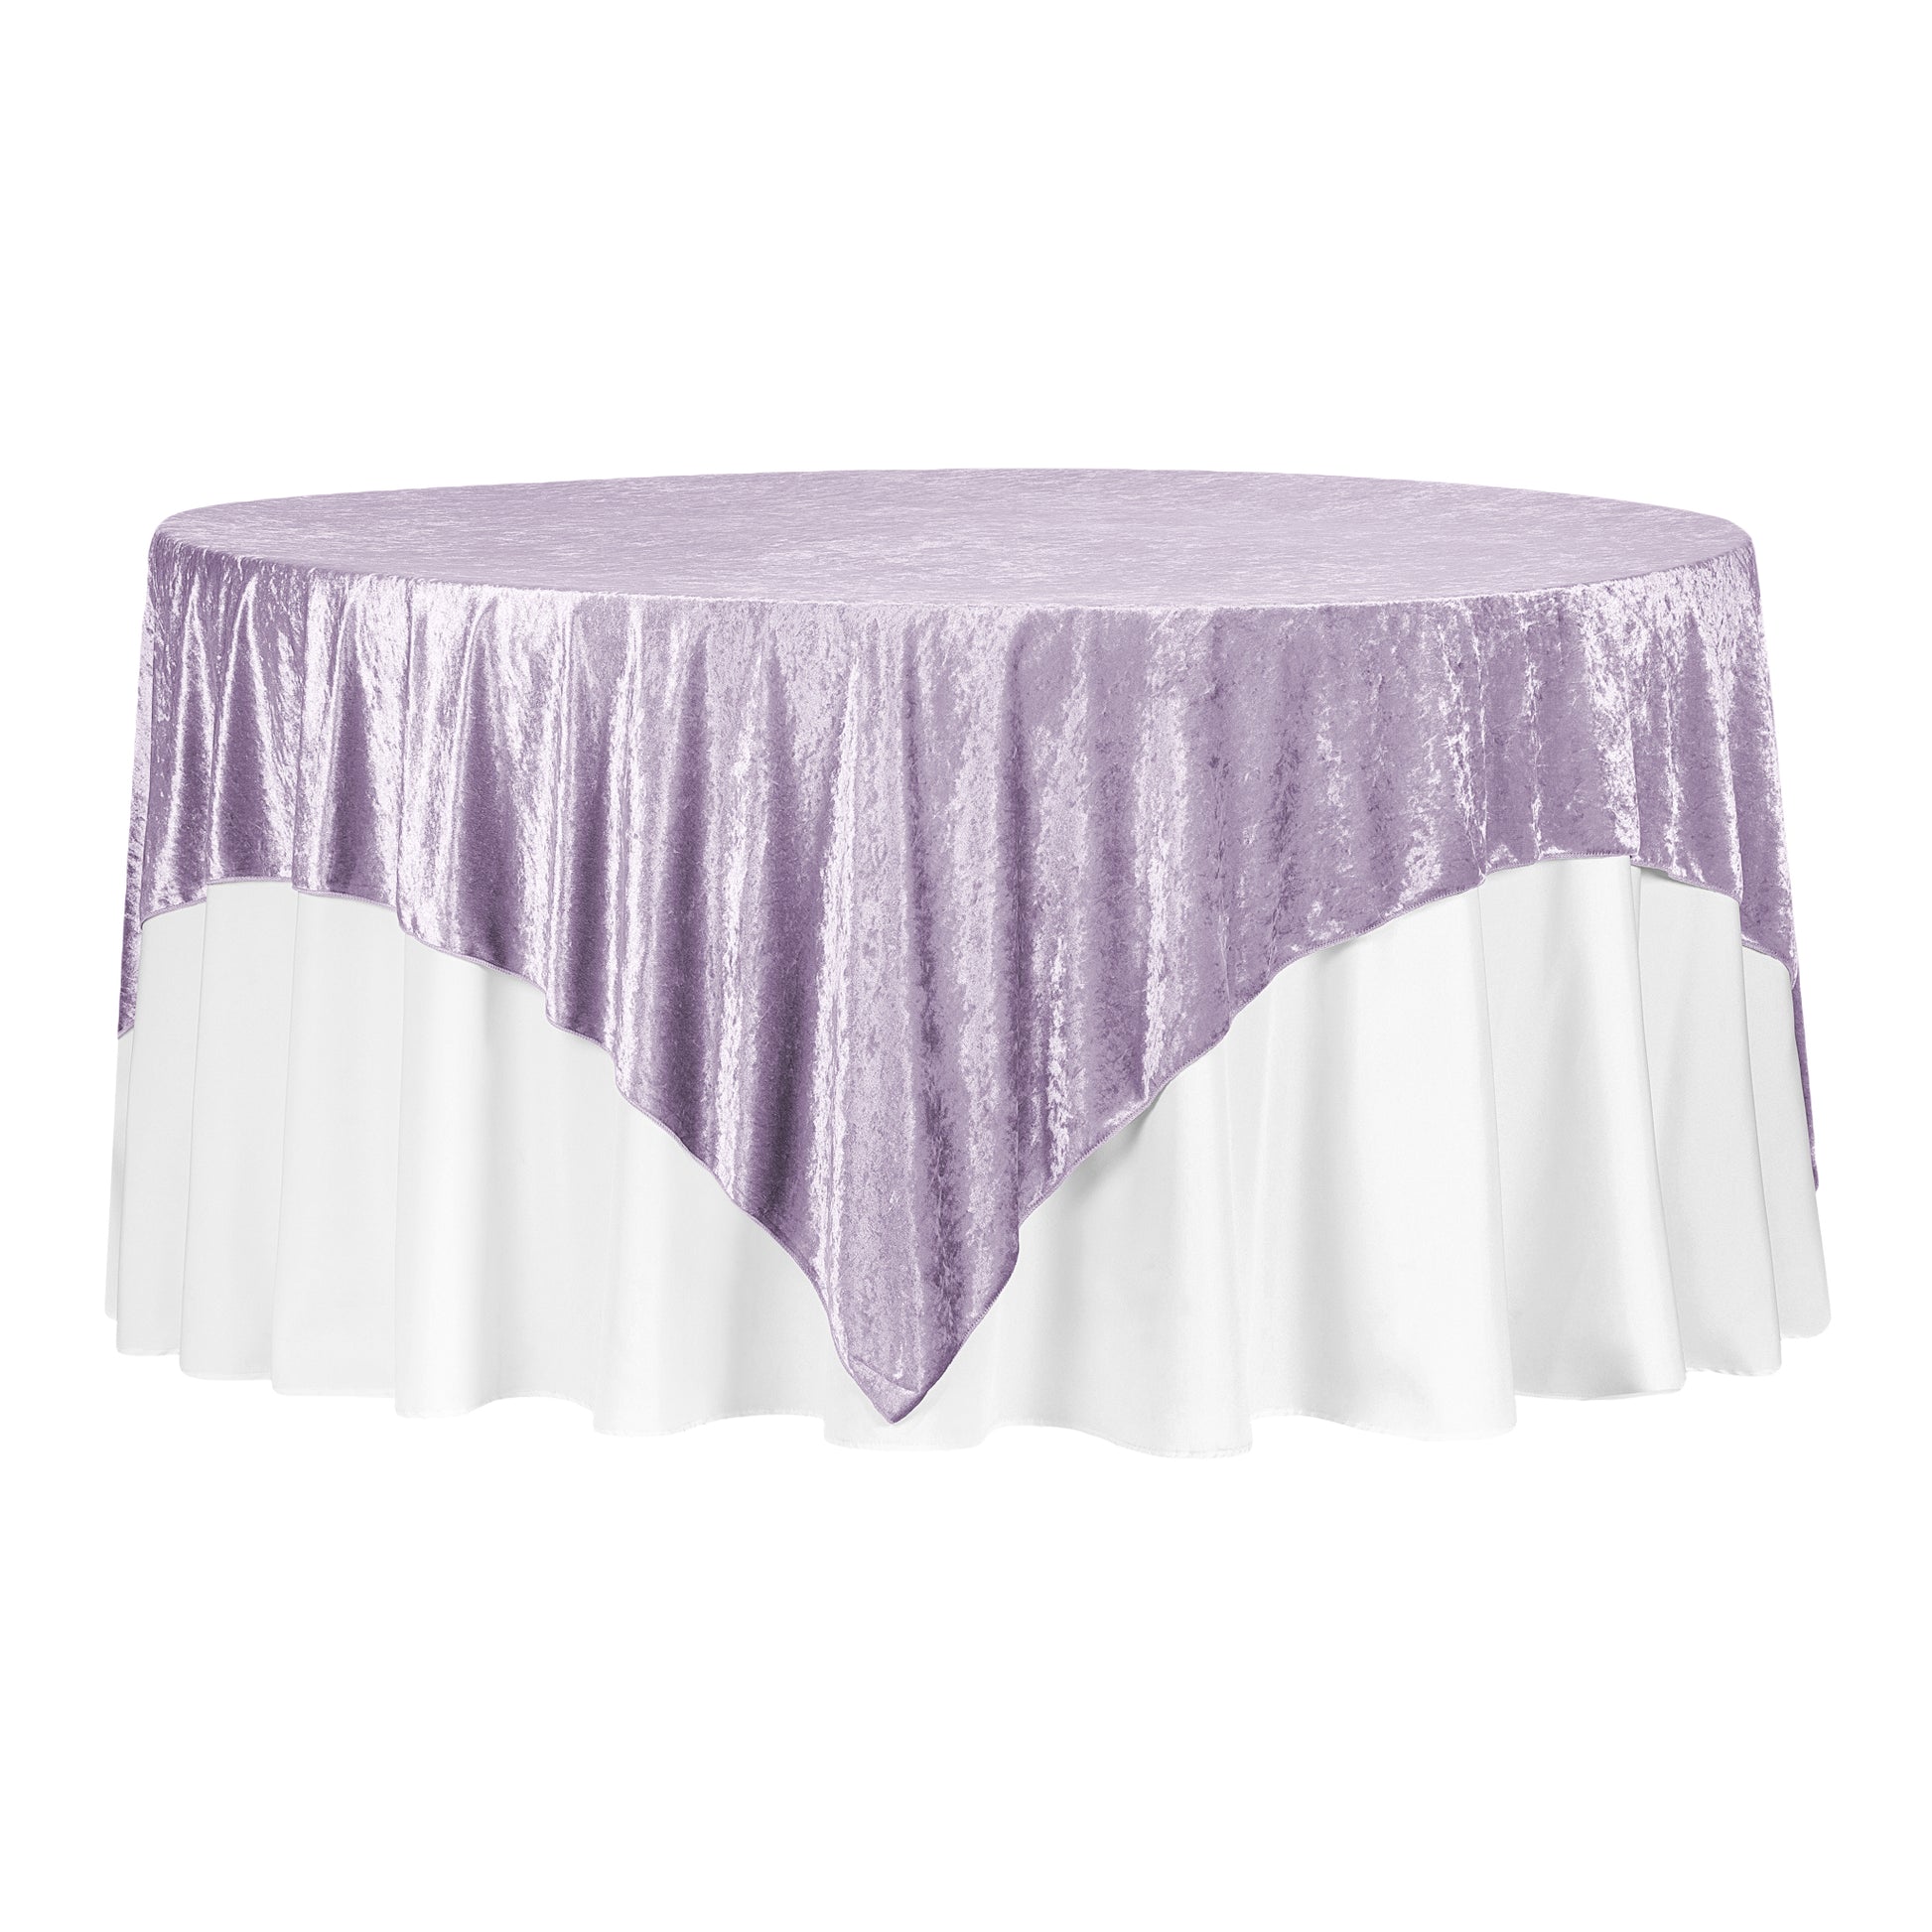 Velvet 85"x85" Square Tablecloth Table Overlay - Wisteria - CV Linens